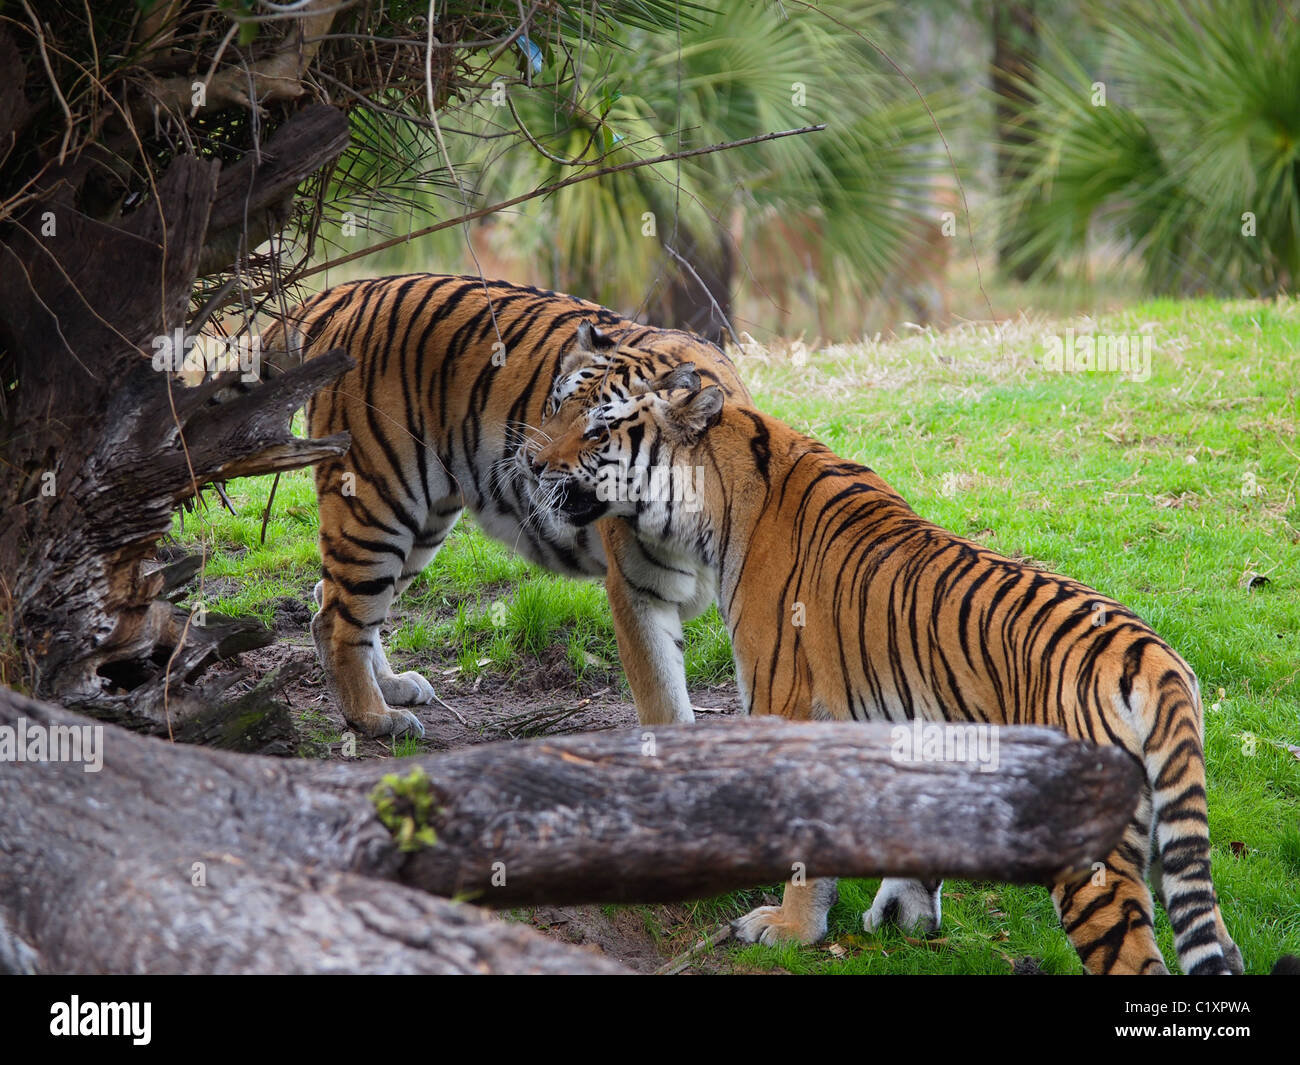 Tigers Gazing in Unison Stock Photo